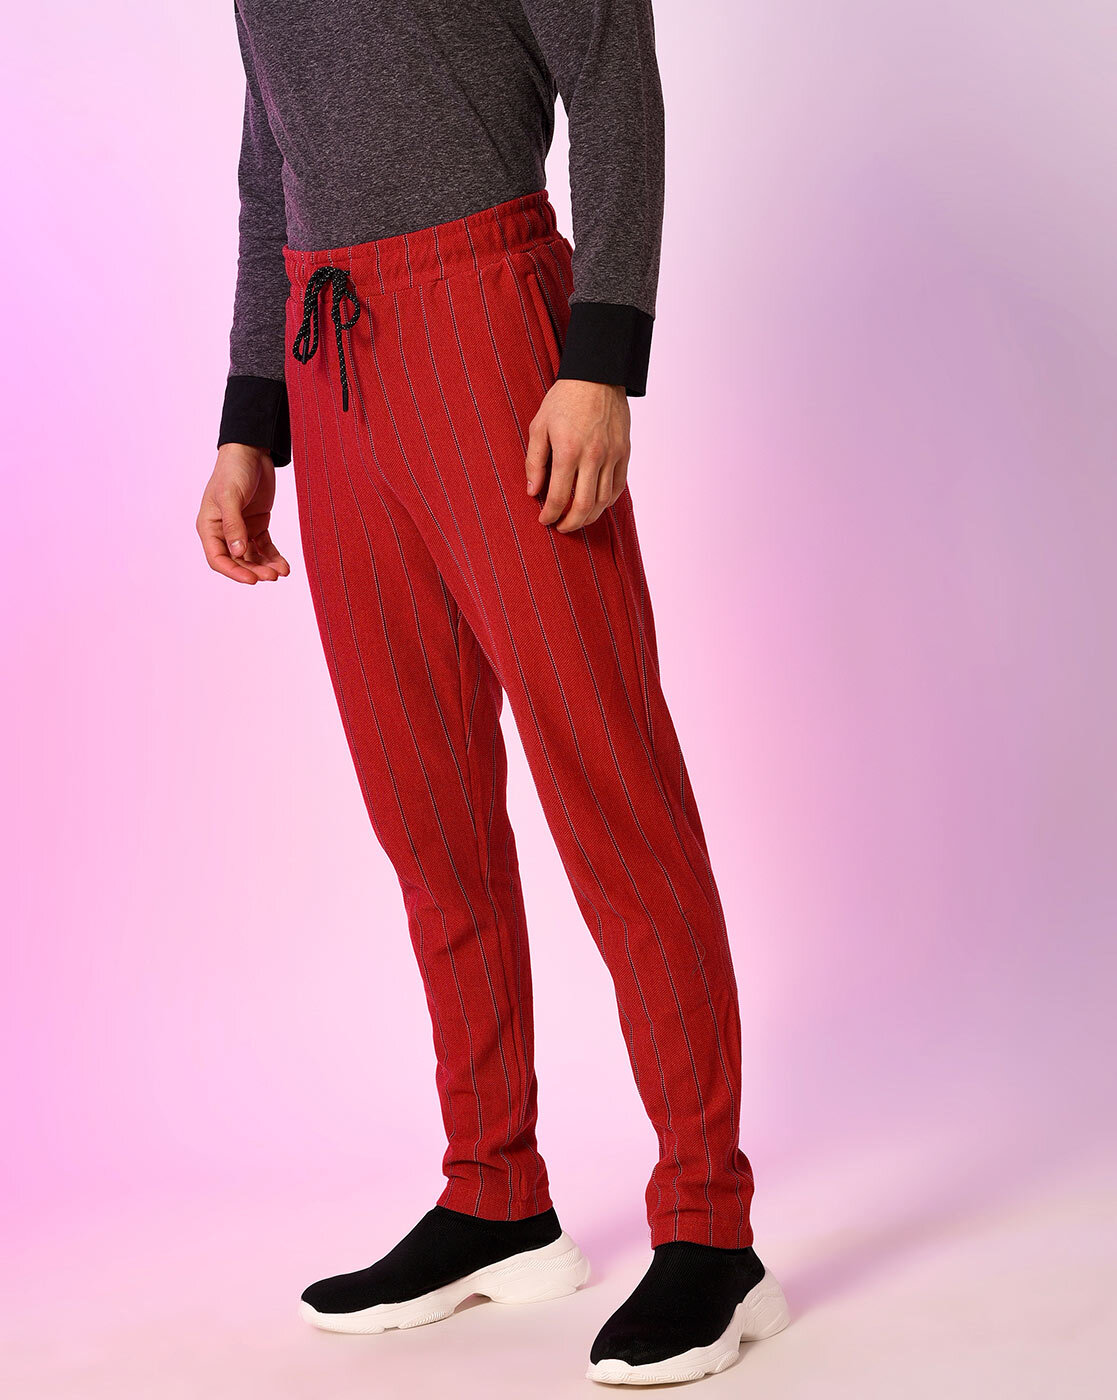 Chalk stripe trousers (241MG492L00SC03803) for Man | Brunello Cucinelli